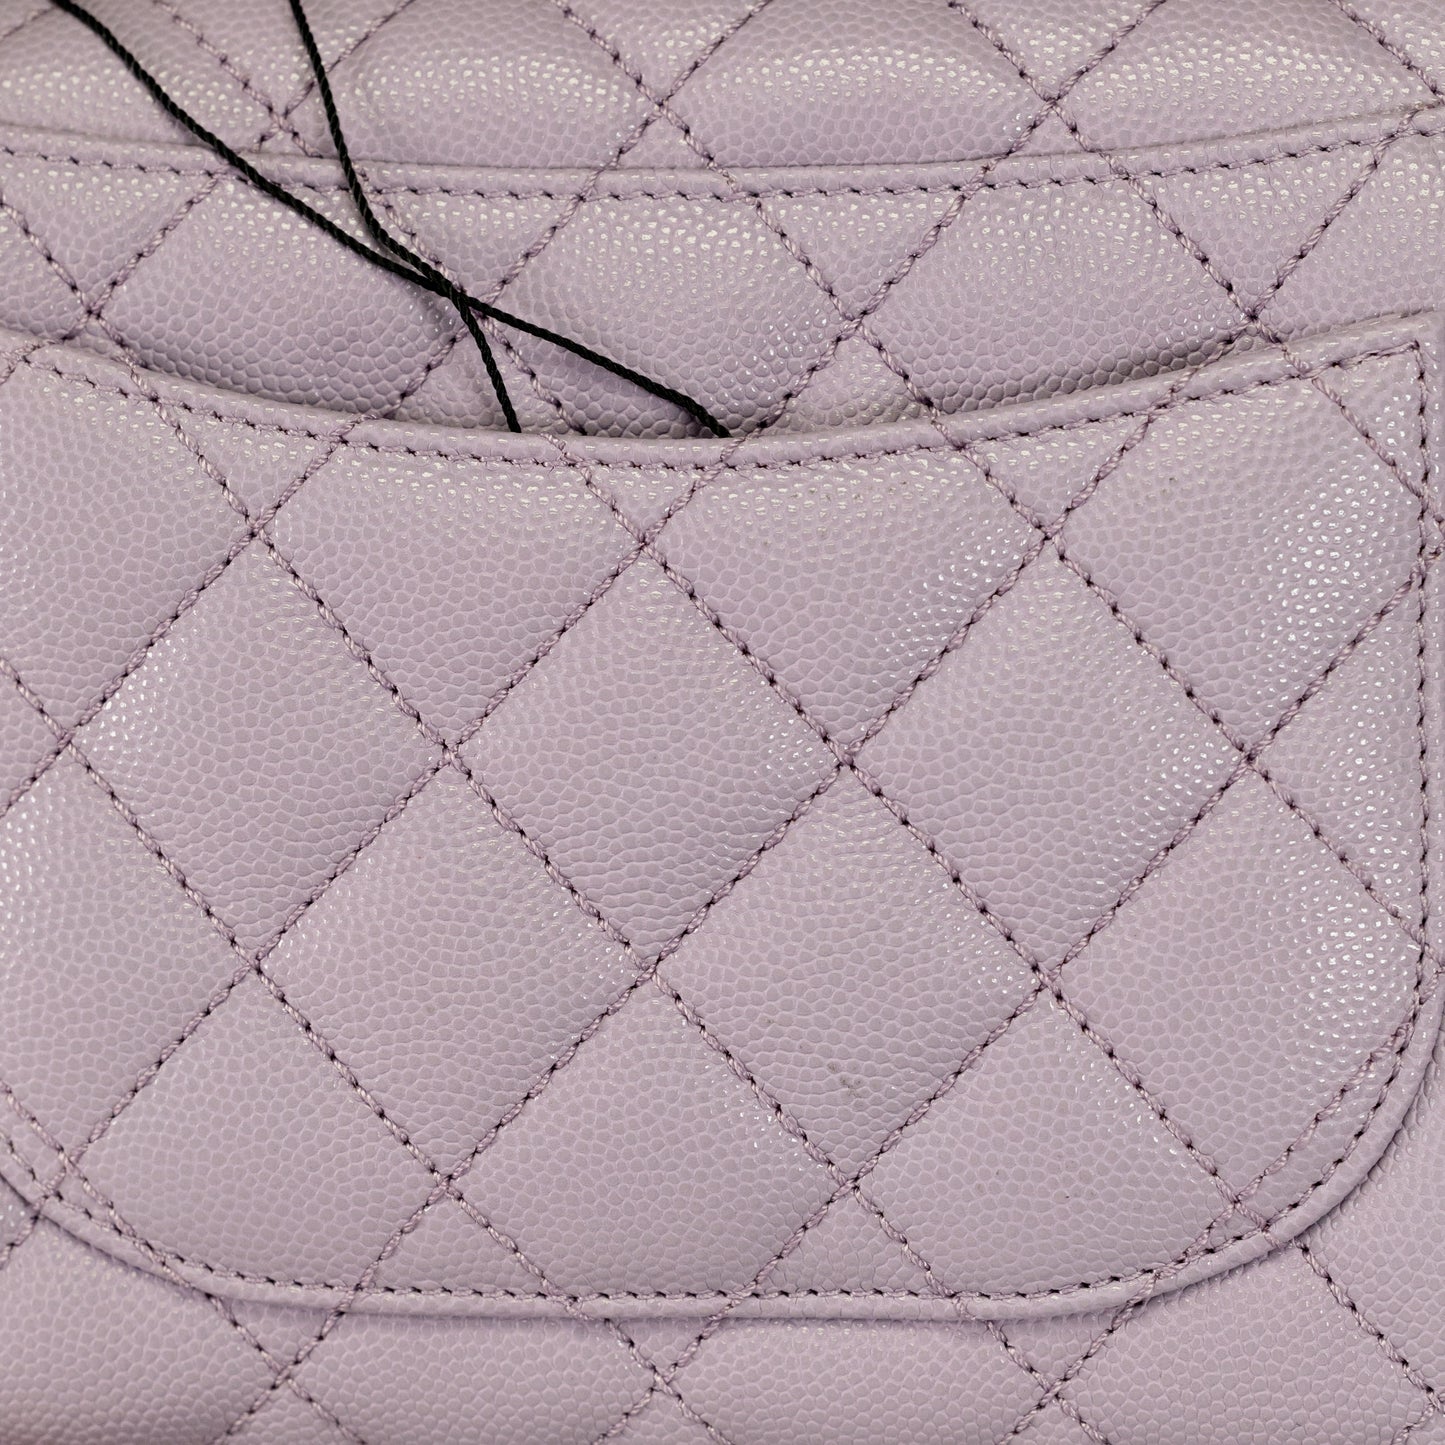 Chanel Flapbag with Handle in Vea/Violet